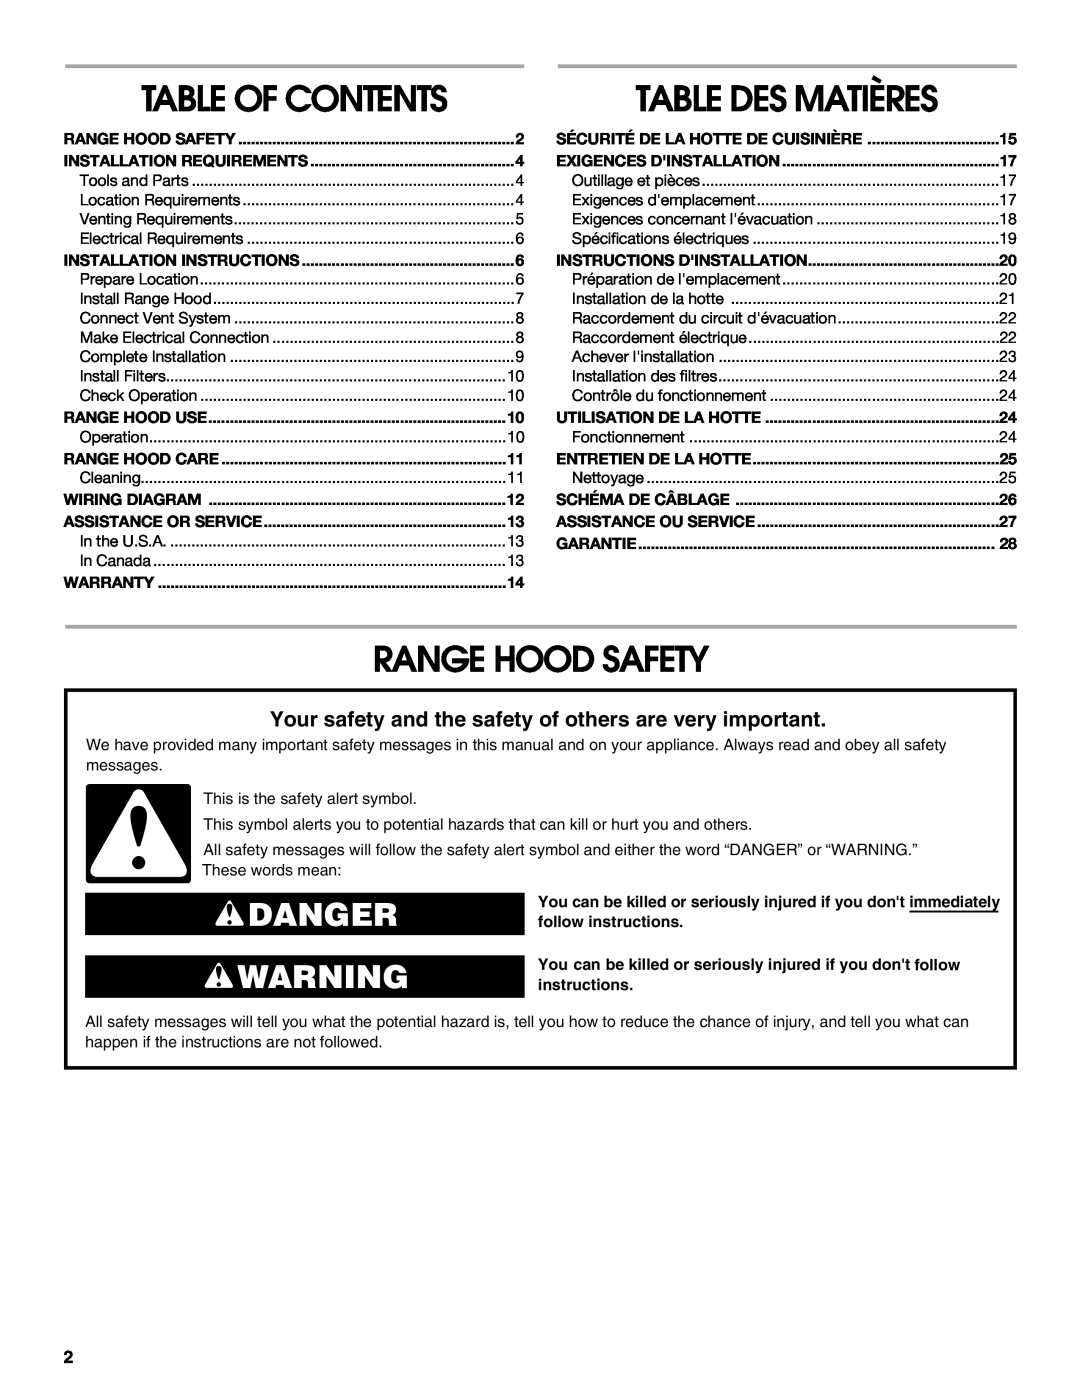 Whirlpool W10018010 Range Hood Safety, Danger, Installation Requirements, Installation Instructions, Range Hood Use 